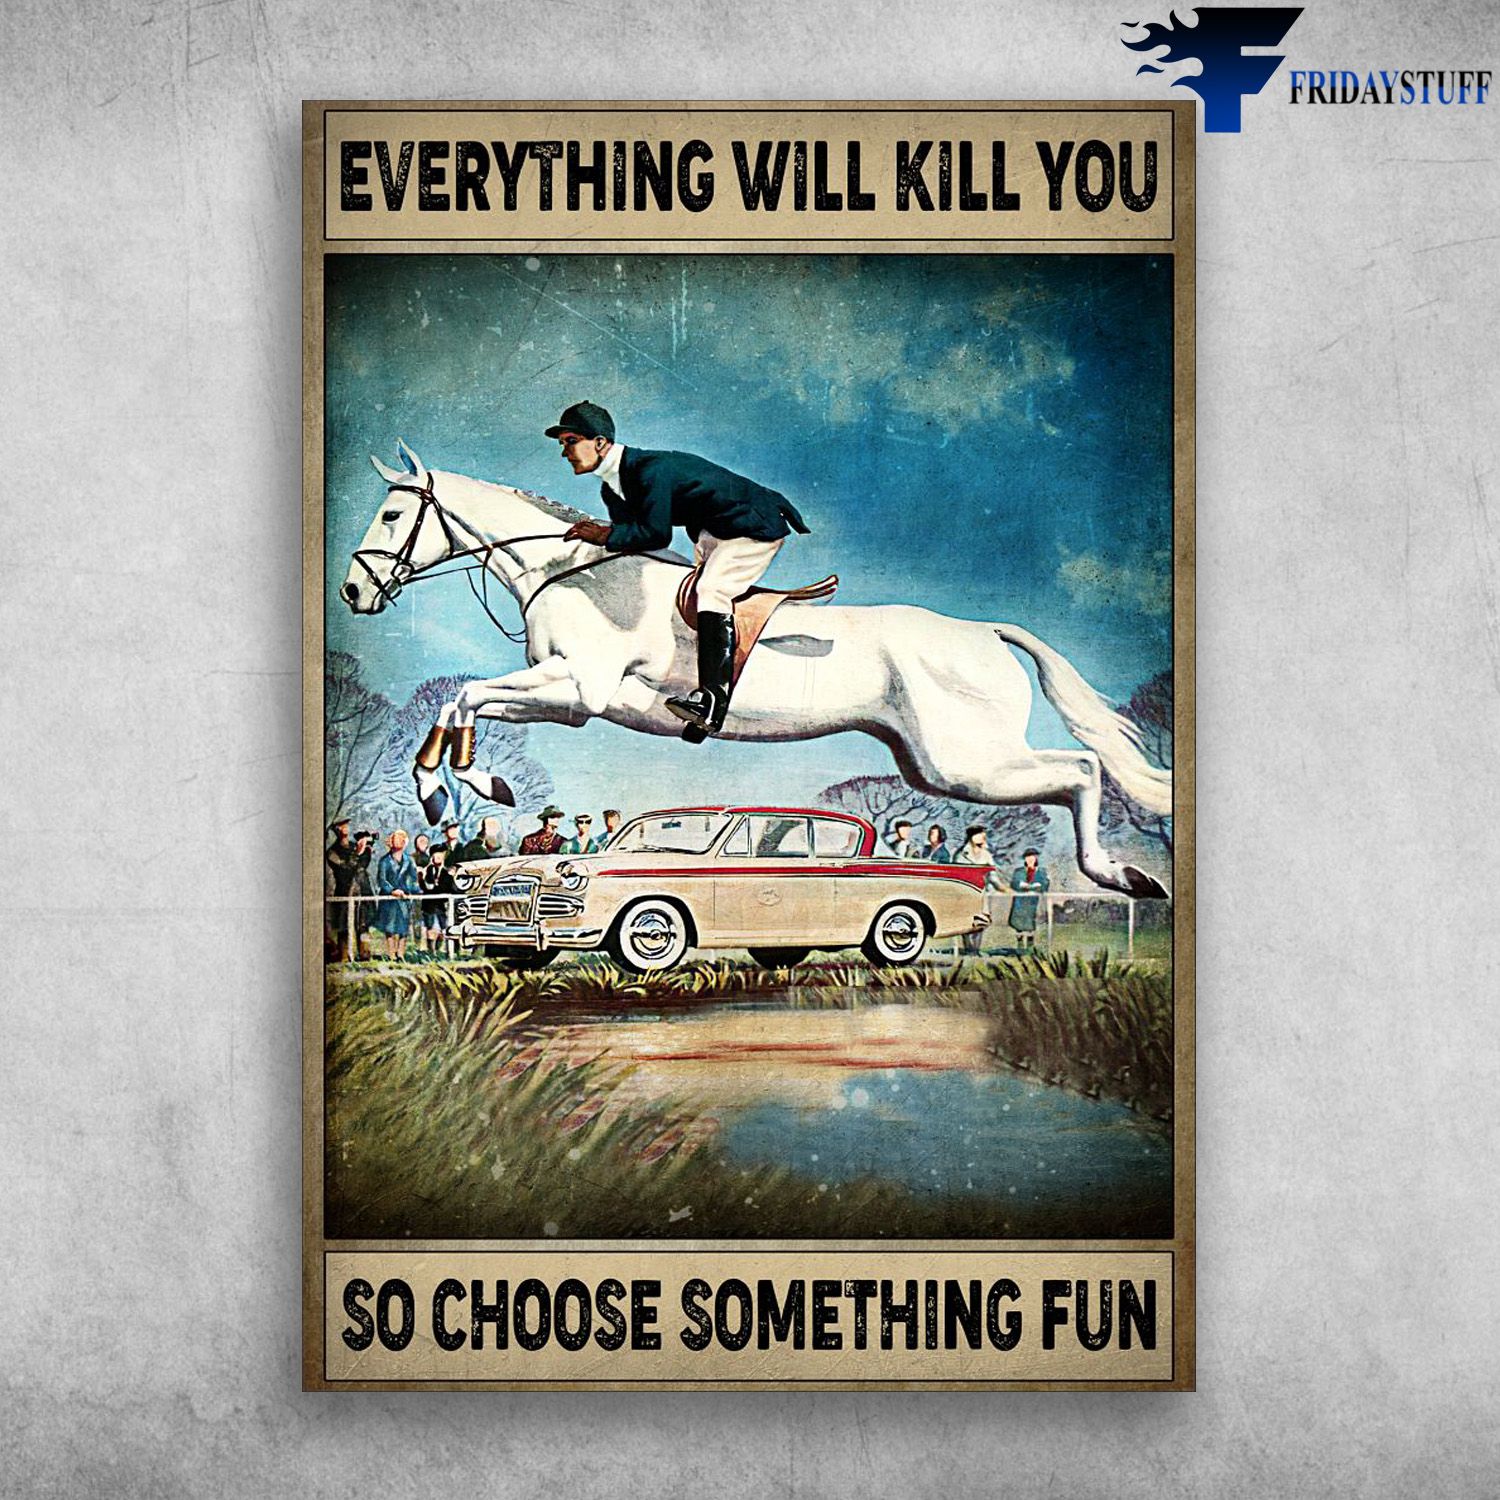 Man Riding Horse - Everything Will Kill You, So Choose Something Fun